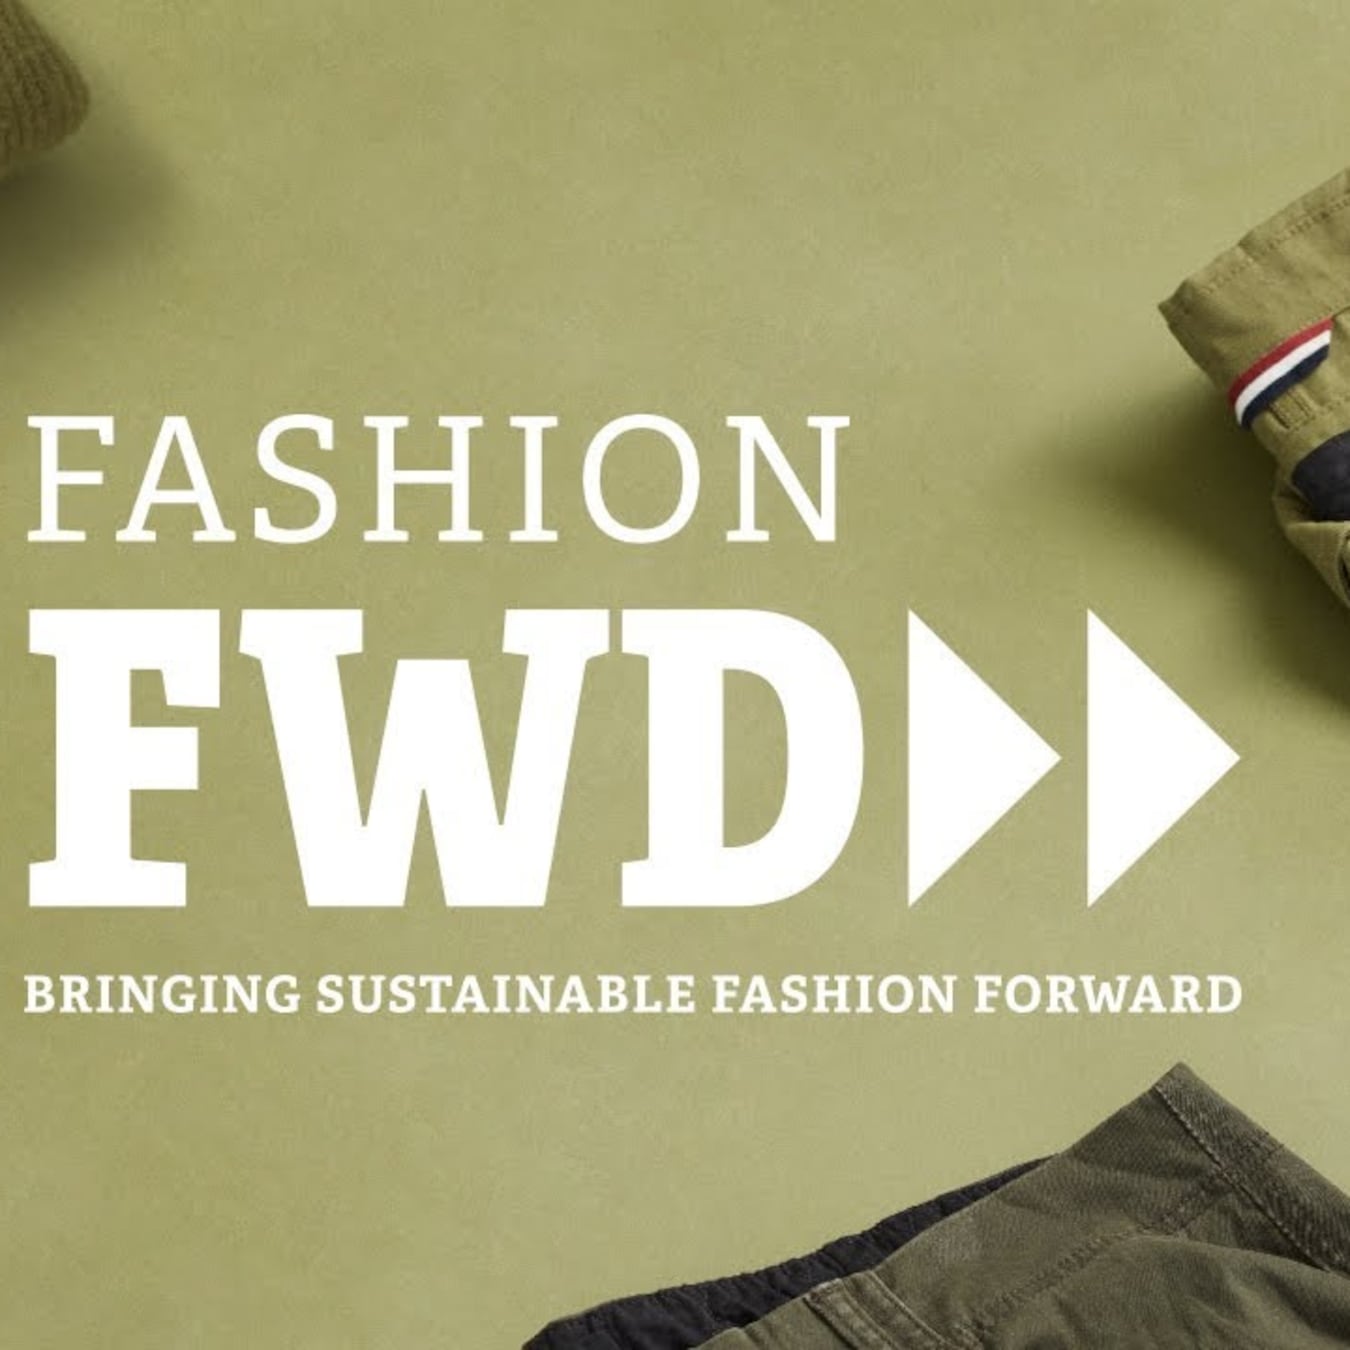 Project-Fashion FWD - Bringing sustainable fashion forward